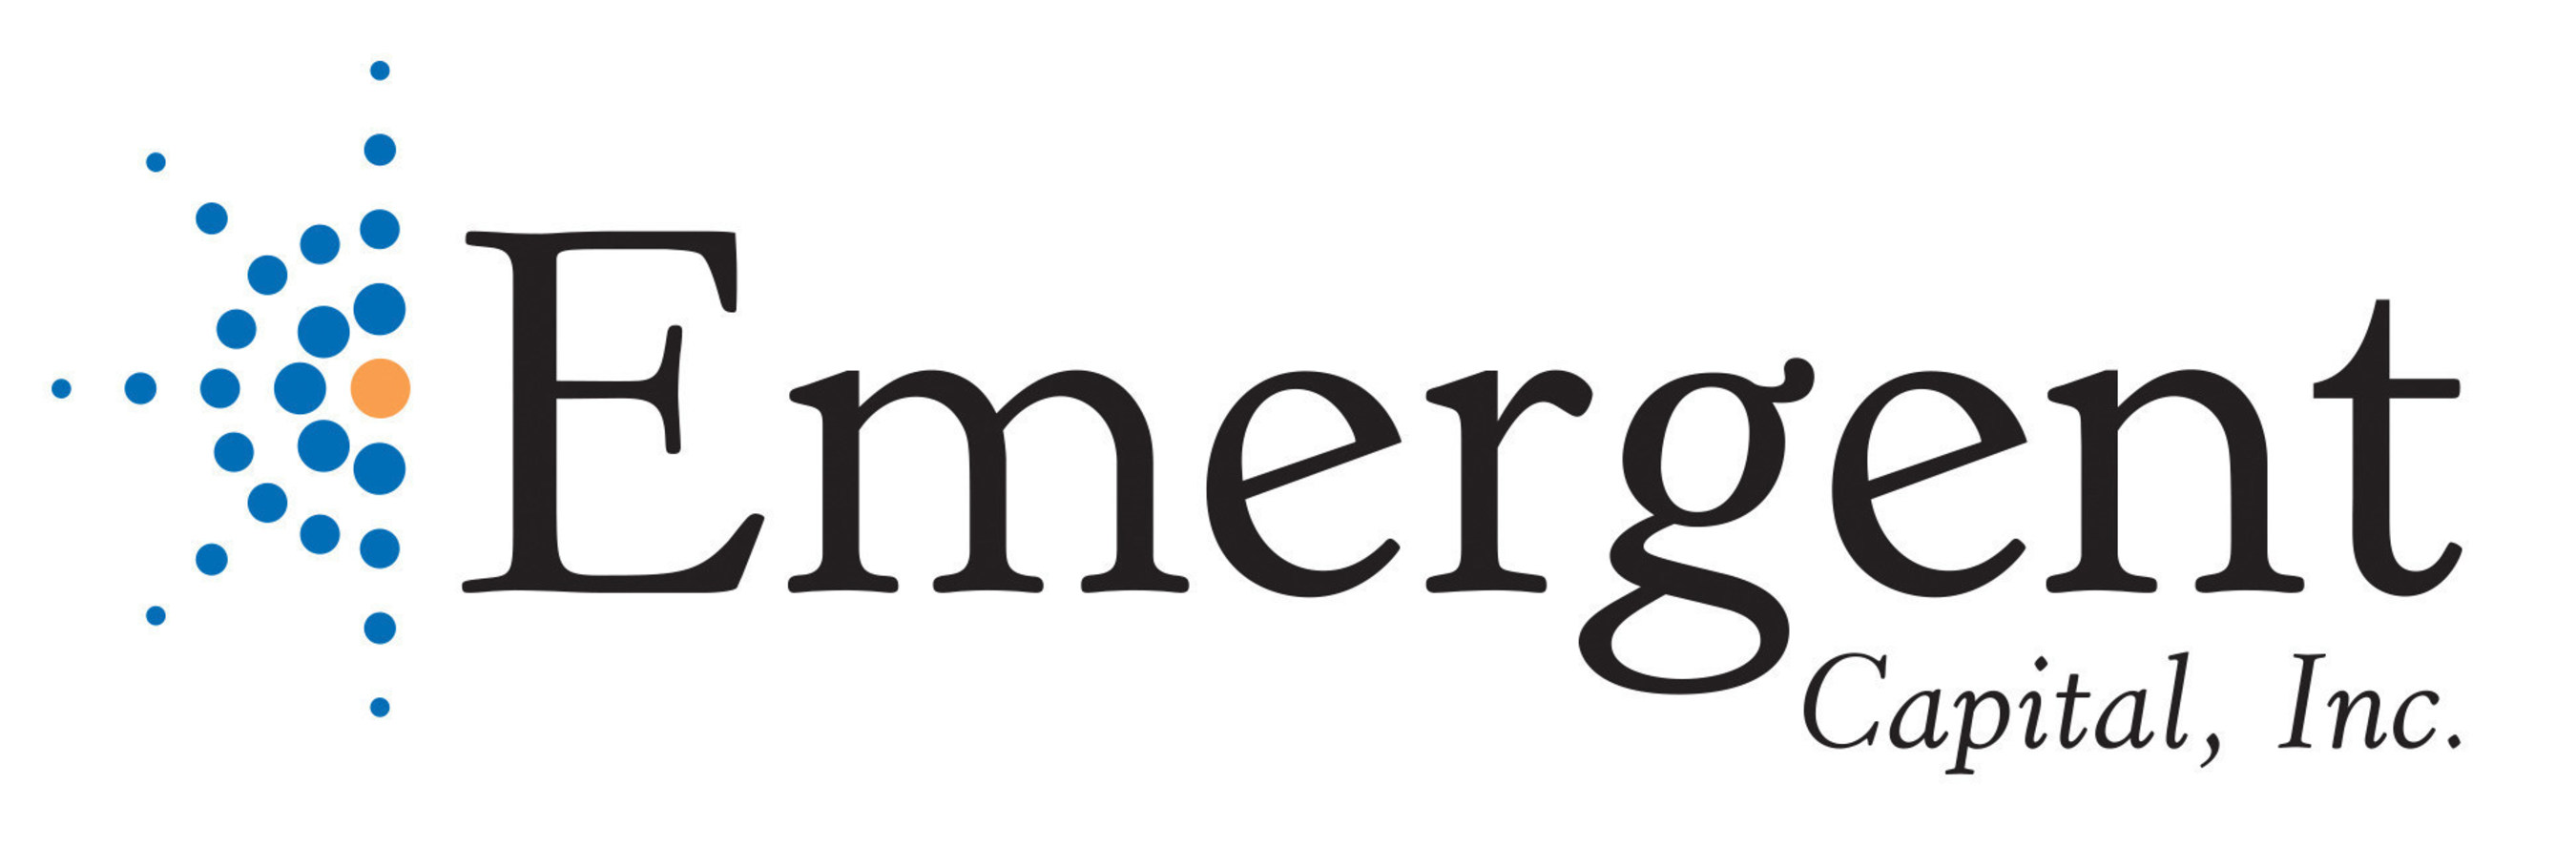 Emergent Capital, Inc. logo (PRNewsFoto/Emergent Capital, Inc.) (PRNewsFoto/Emergent Capital, Inc.)